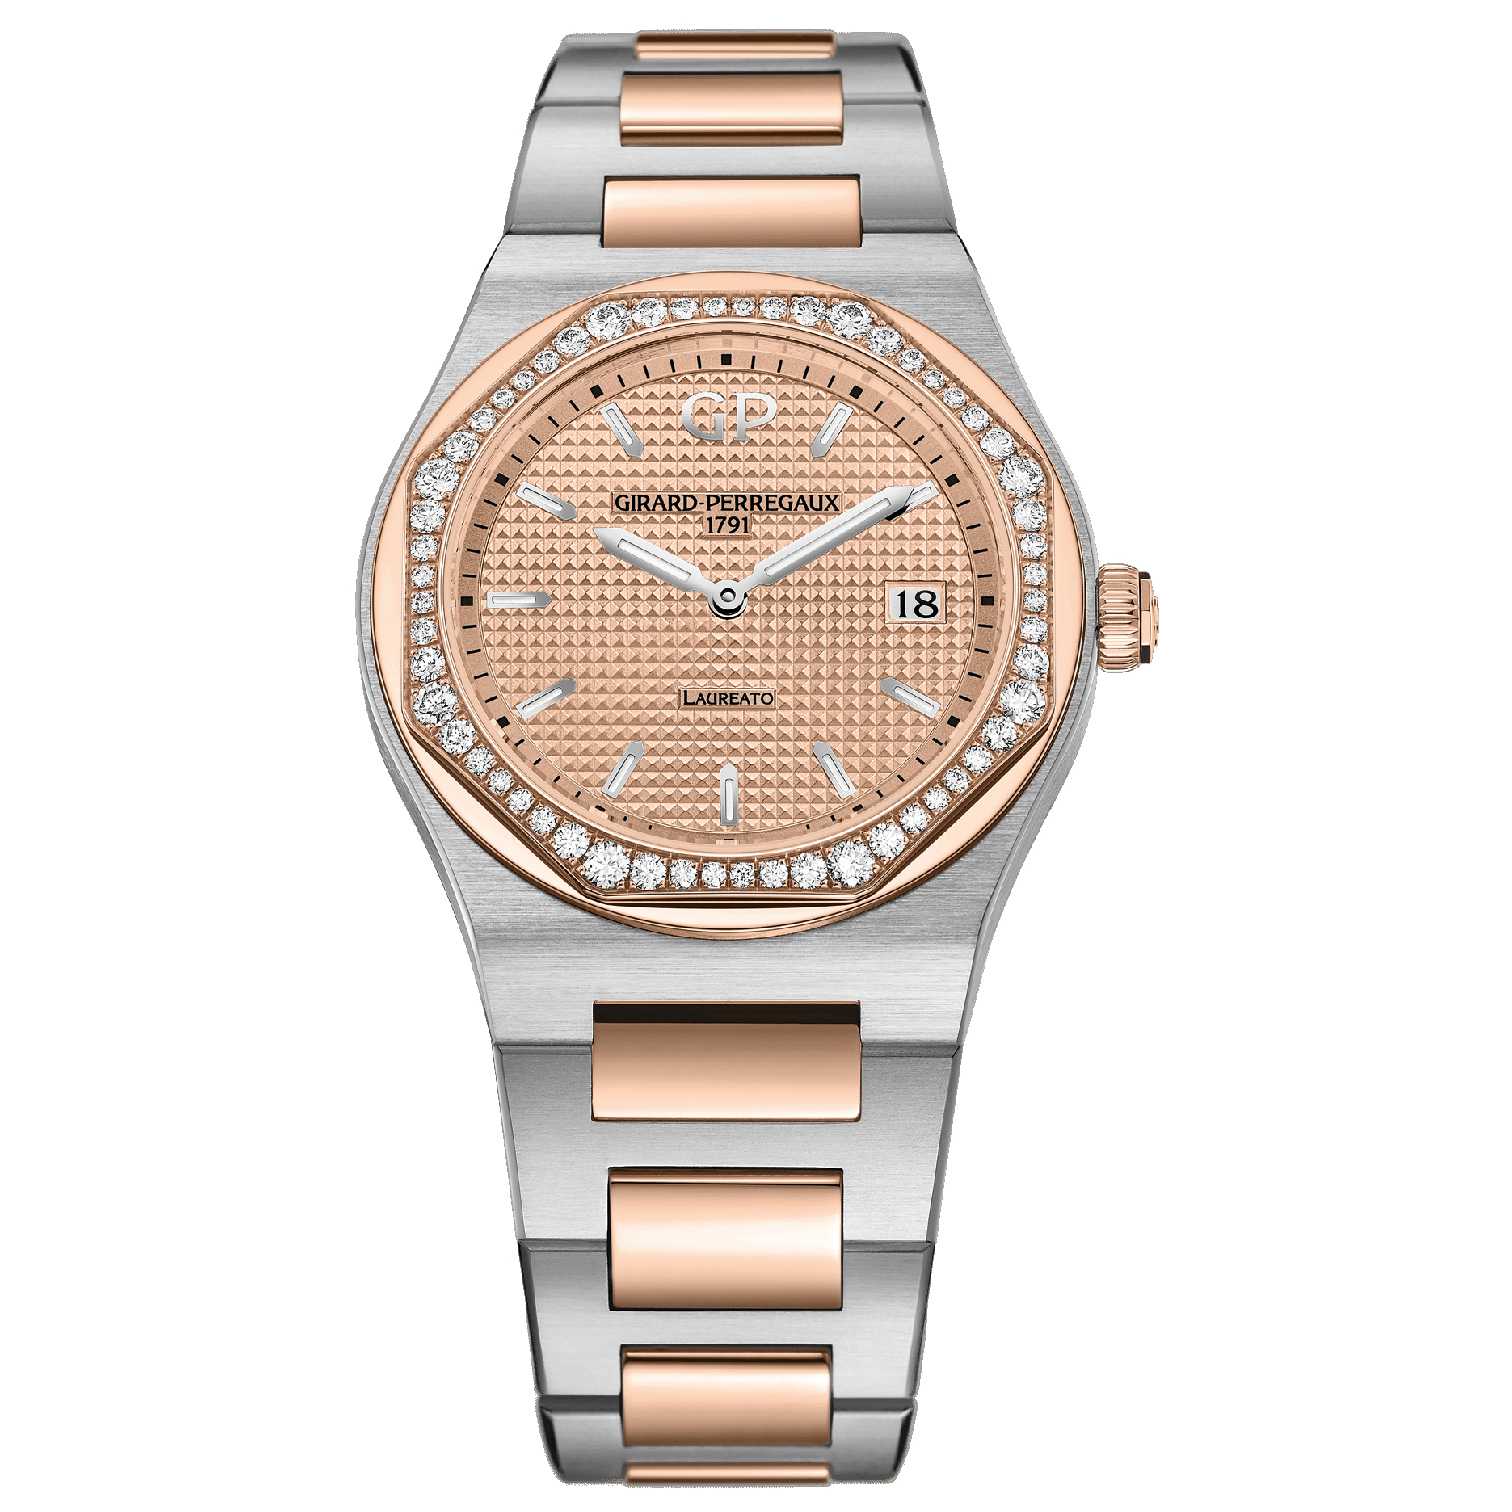 Girard Perregaux Laureato Quartz 34mm Ladies Watch 80189D56A331-56A for $12,720 â¢ Black Tag Watches